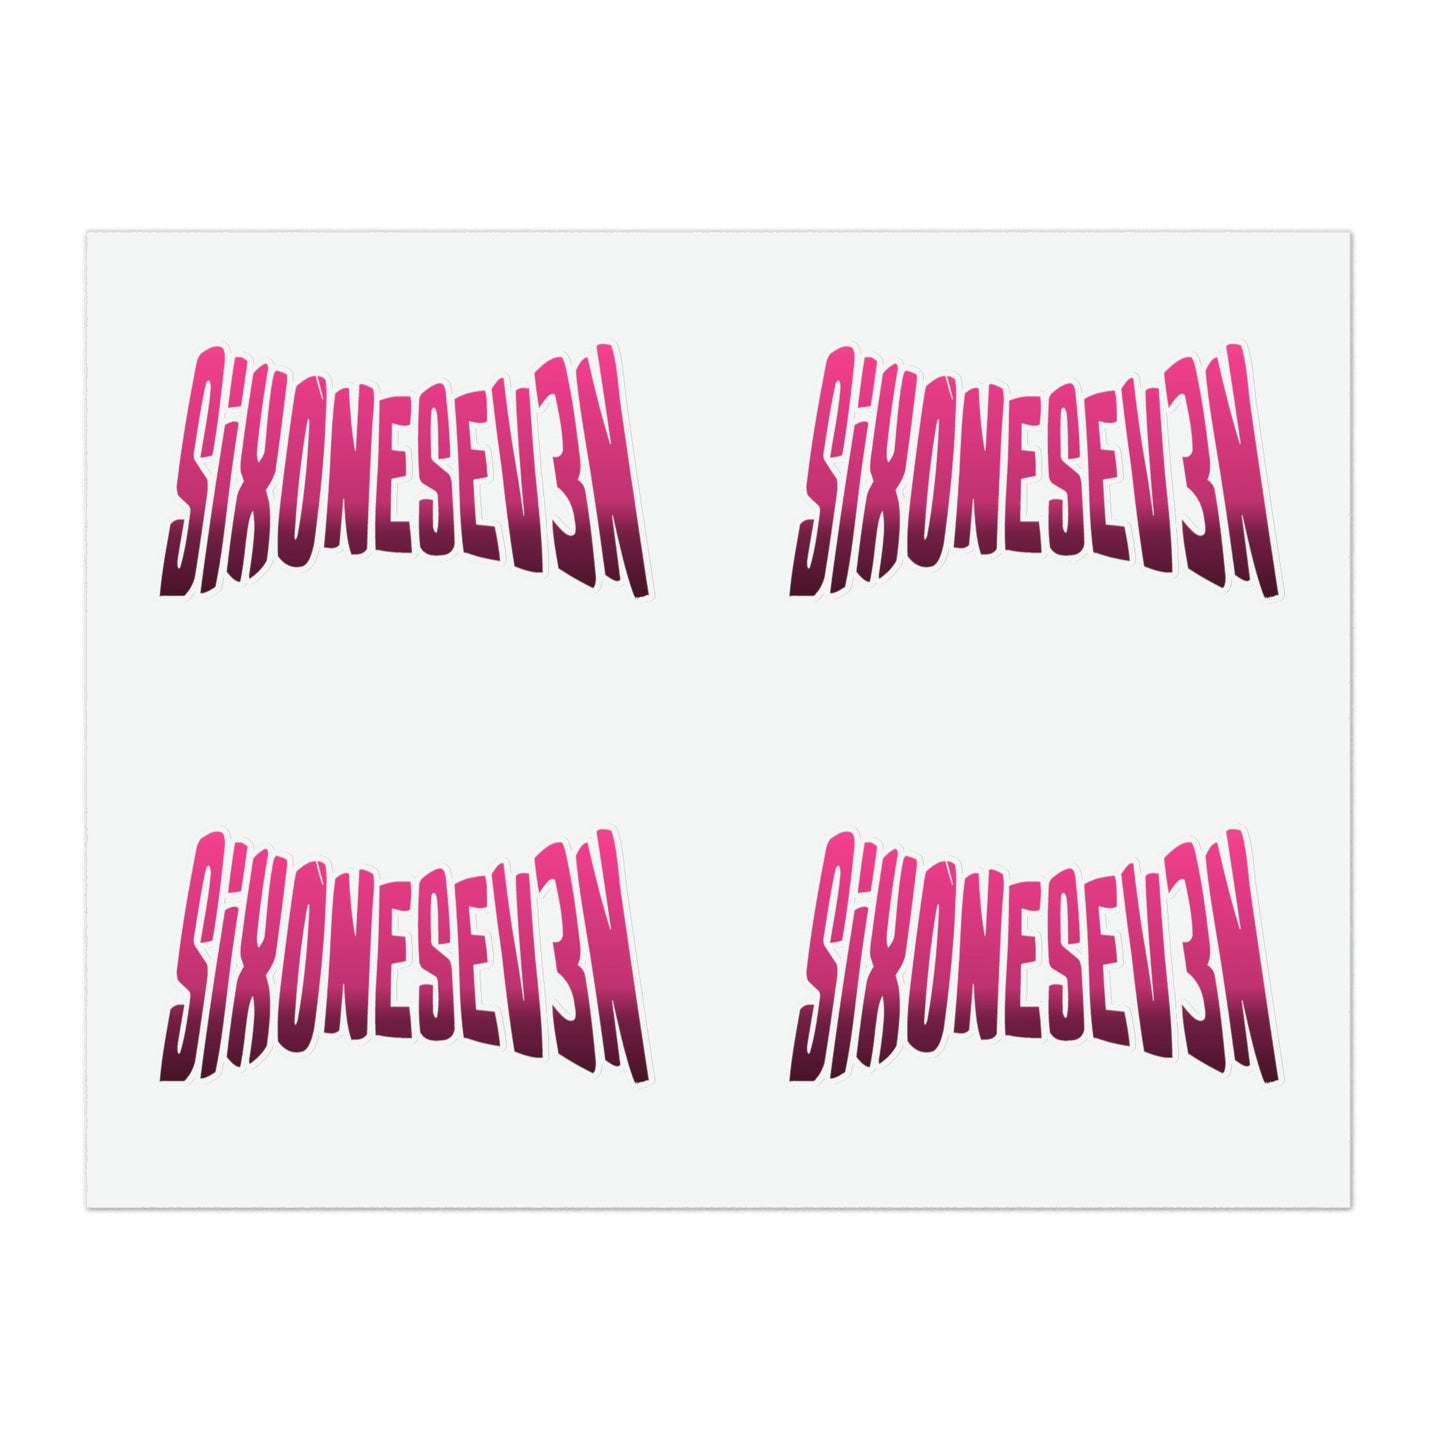 SixOneSev3n Text Sticker Sheets